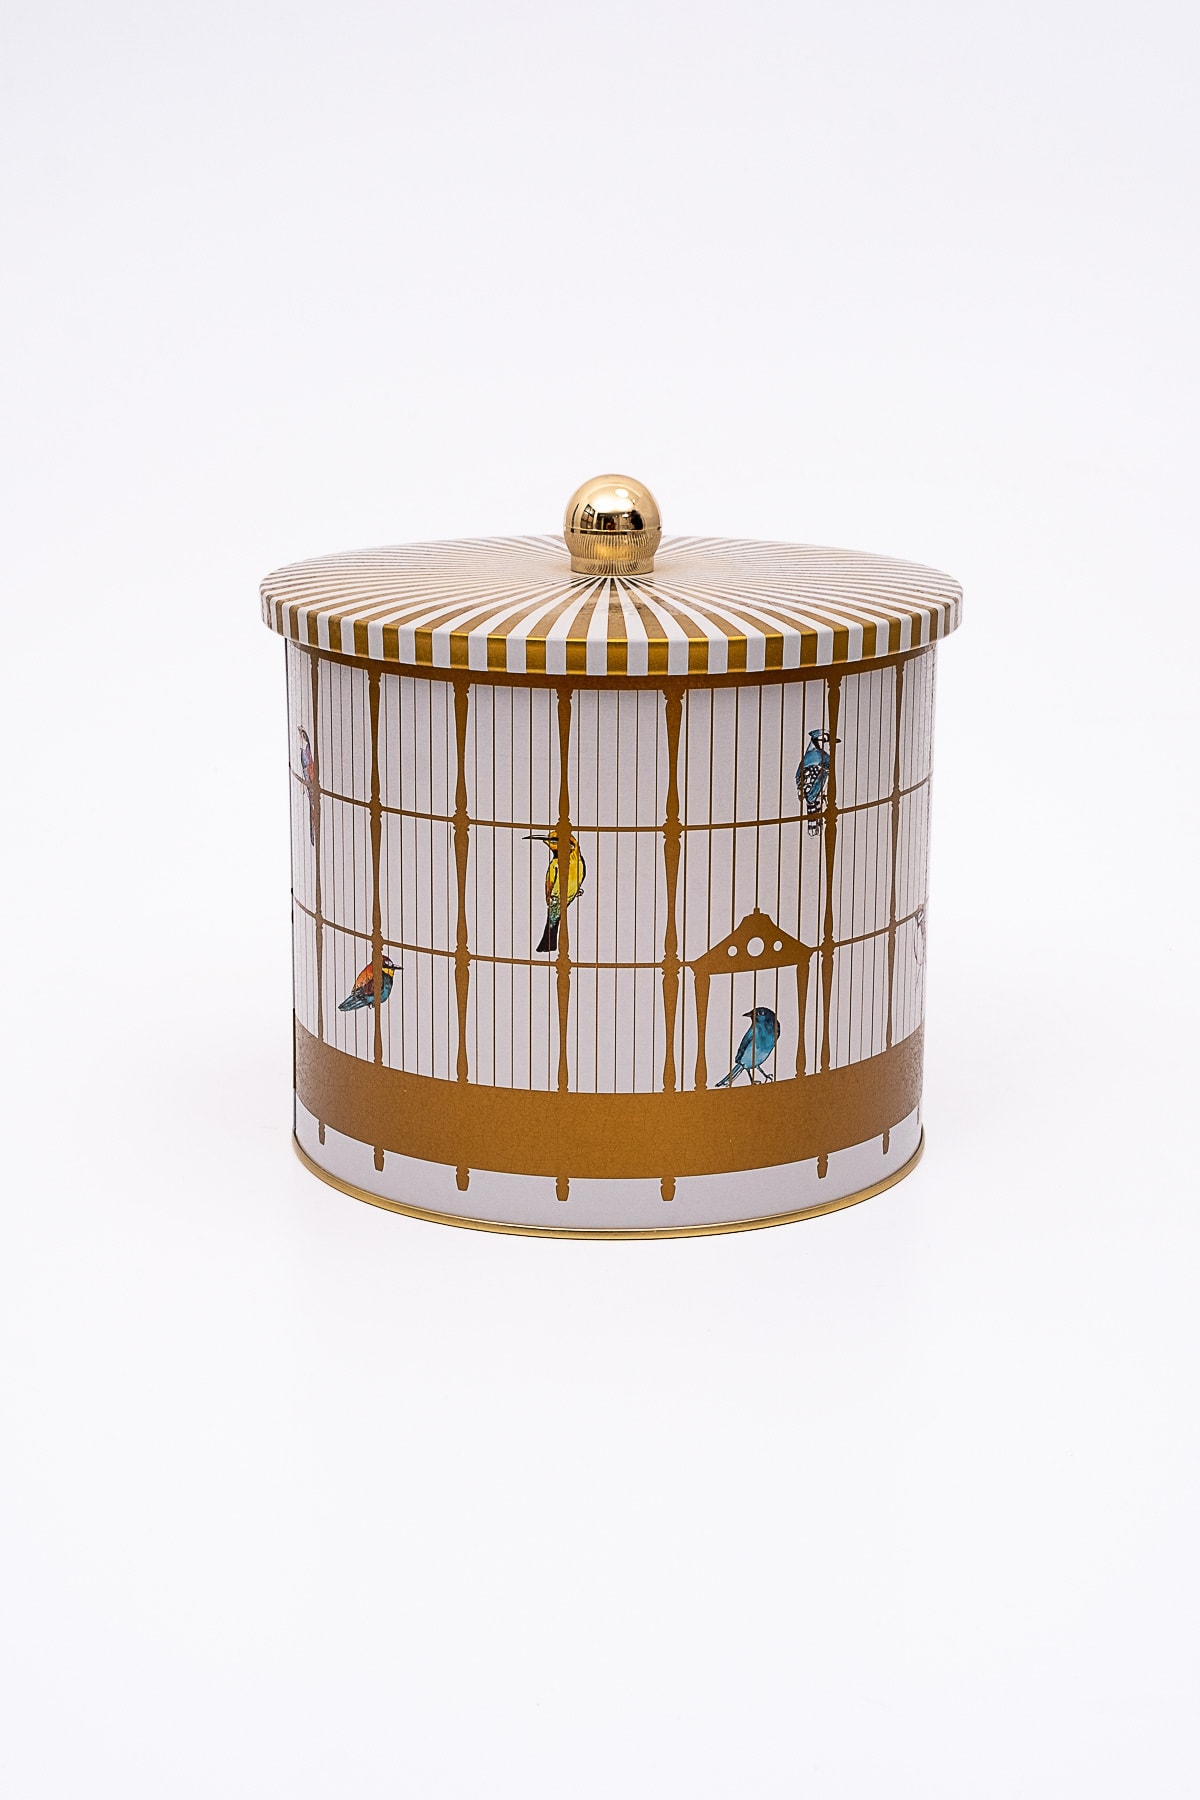 Bird Cage Desenli Topuz Kulplu Yuvarlak Metal Kutu, 17.5 x 15.5 cm, 3.5 lt